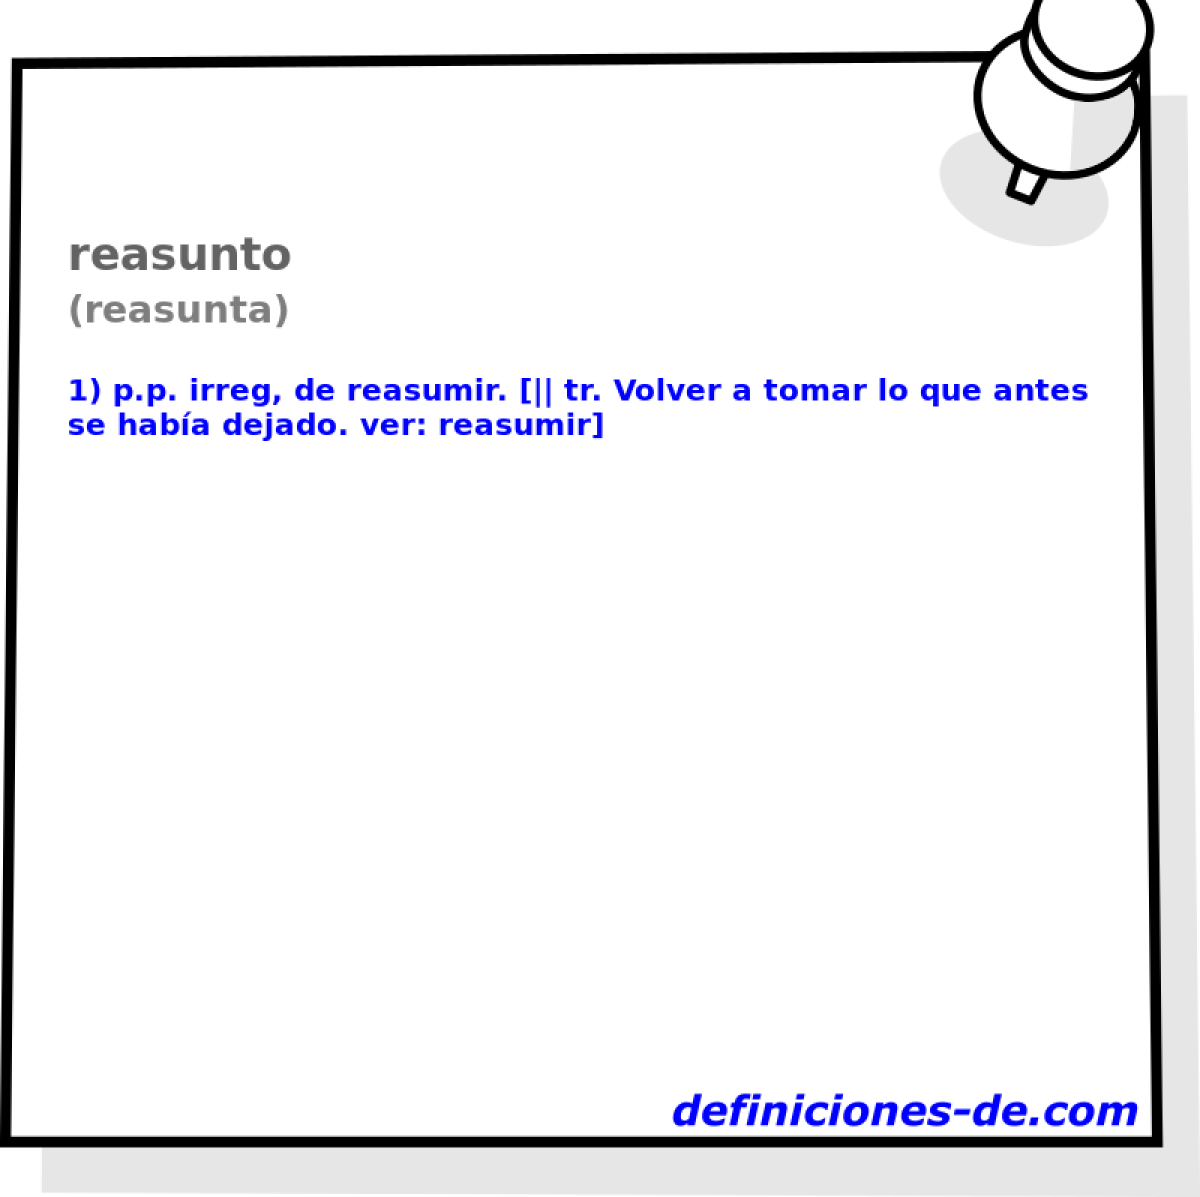 reasunto (reasunta)